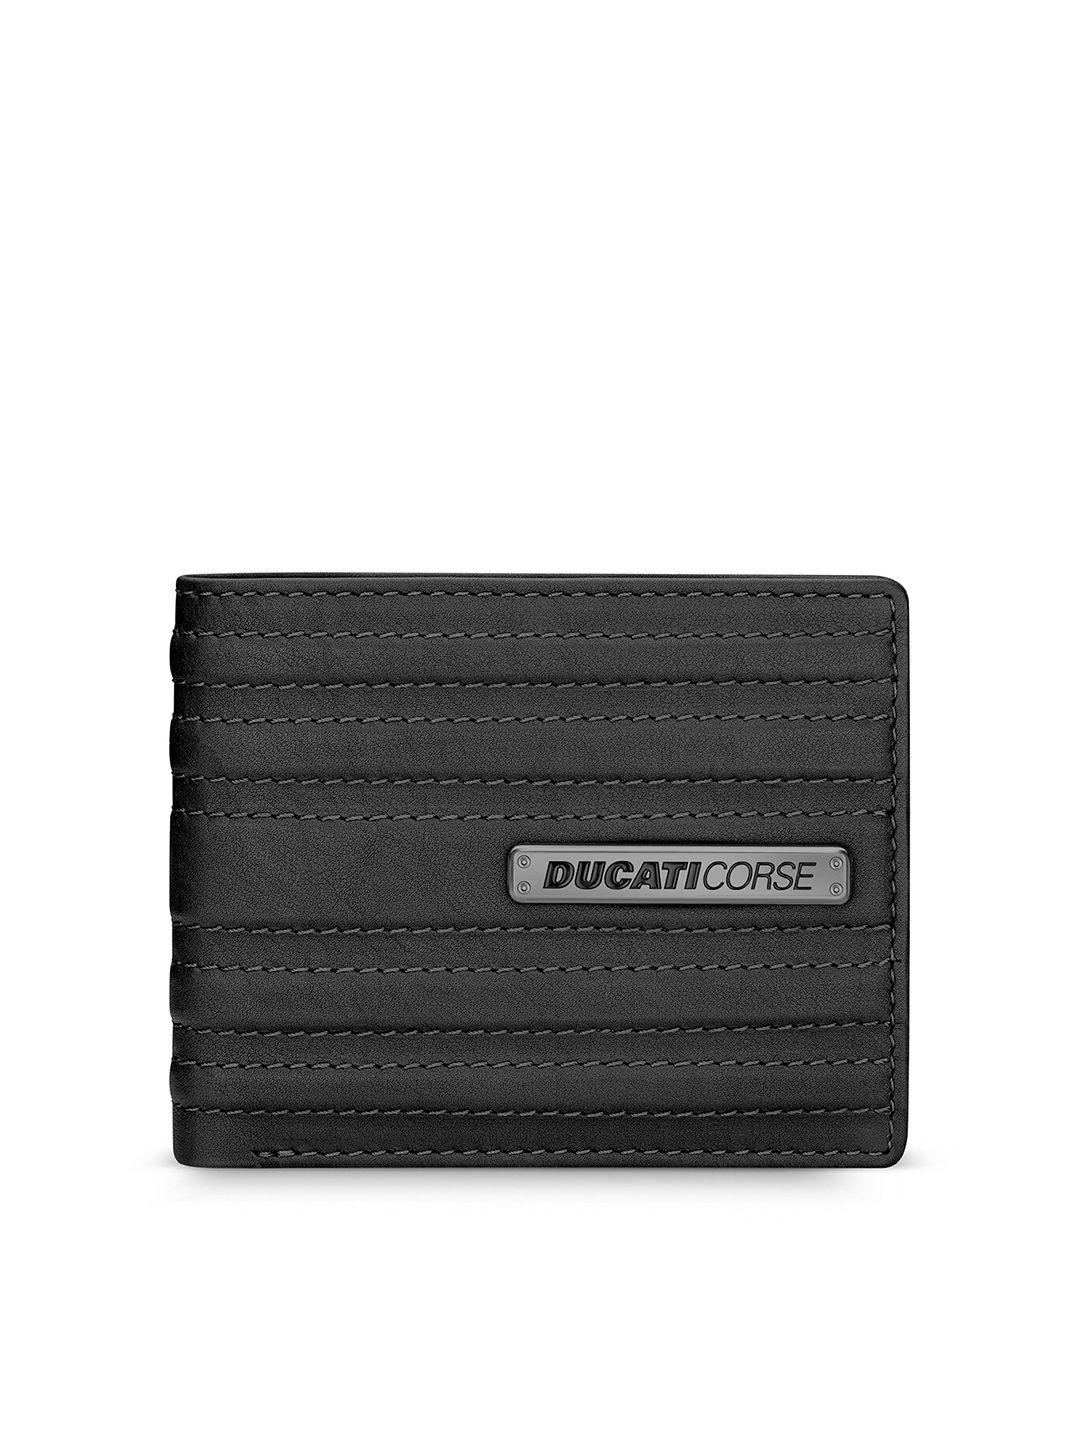 ducati corse men striped leather two fold wallet